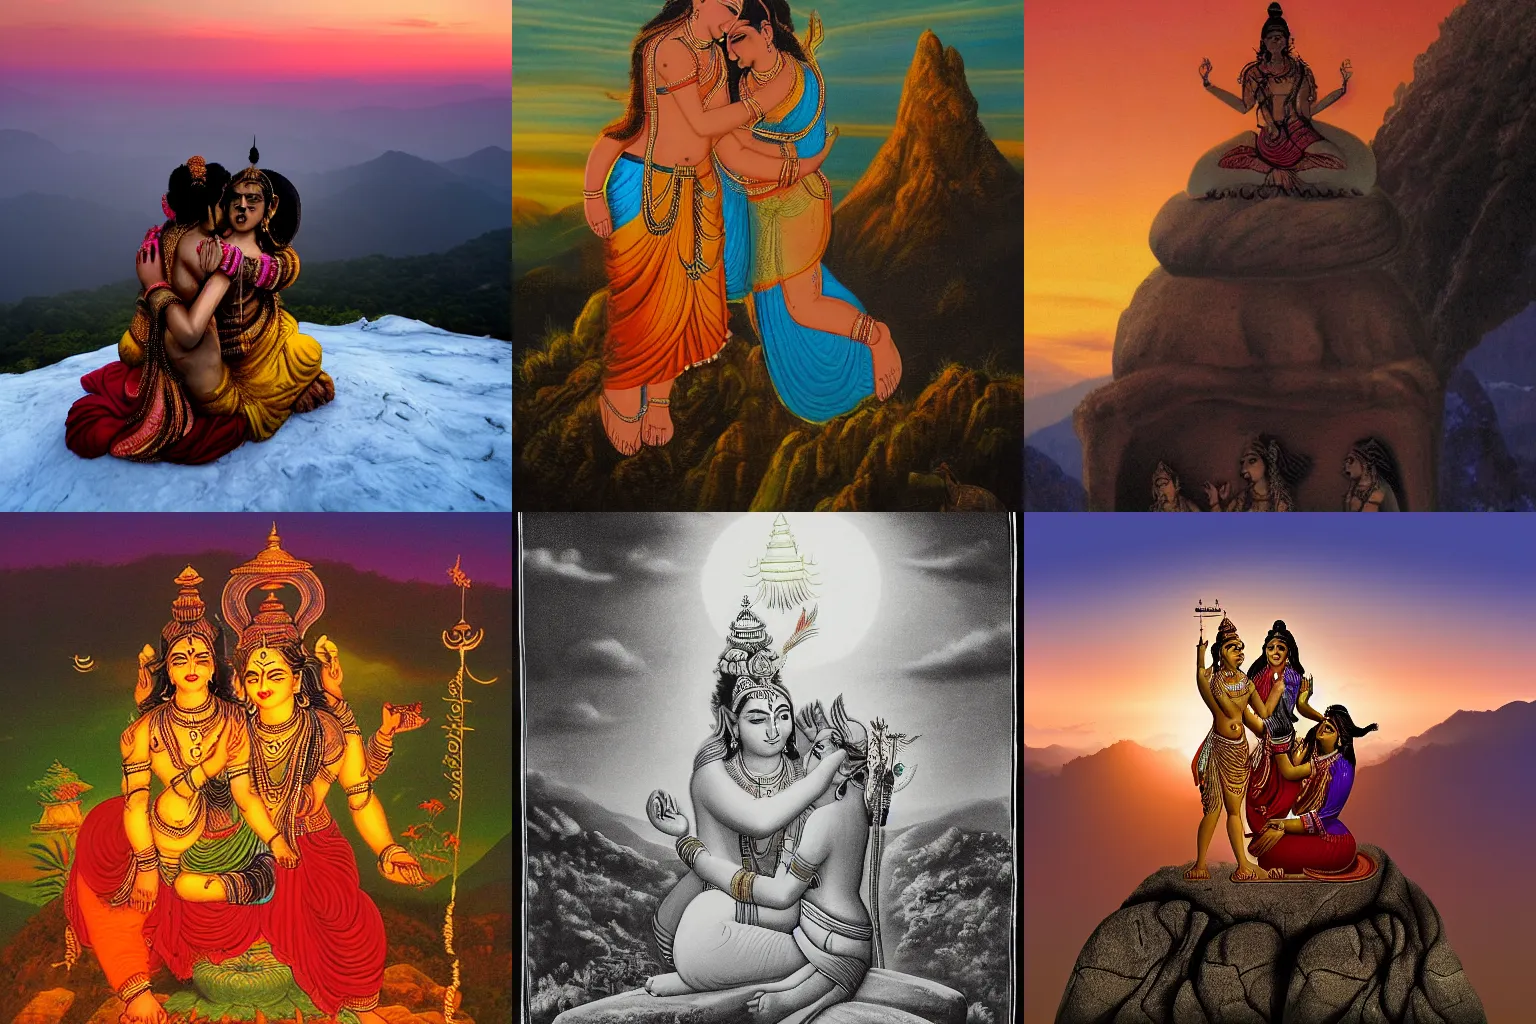 Prompt: shiva embraces lakshmi atop a mountain at dawn